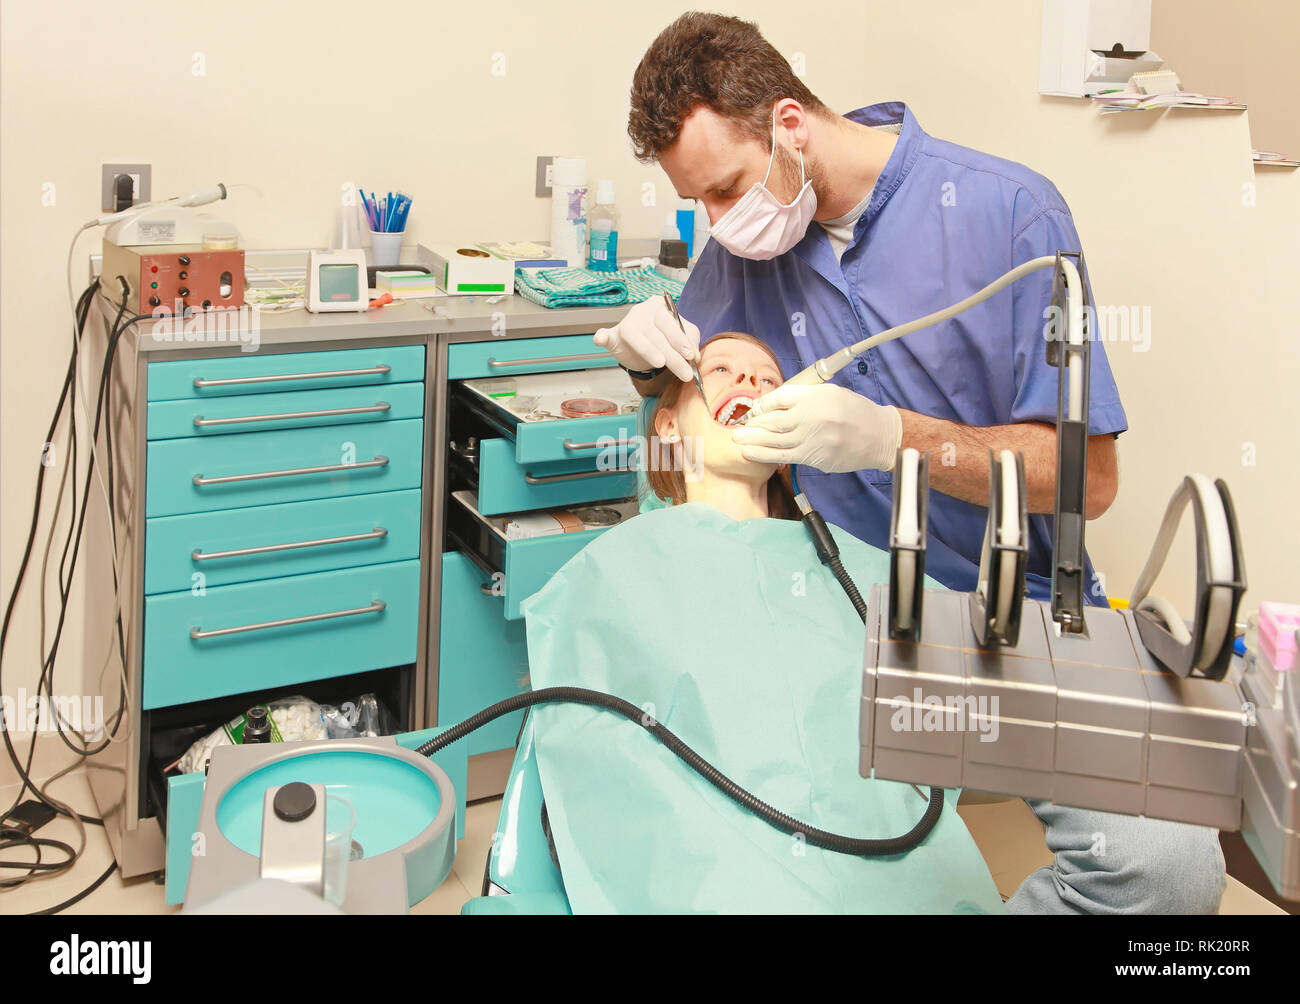 Zahnarzt Arzt Bohren Zahn in Zahnklinik Stockfotografie - Alamy